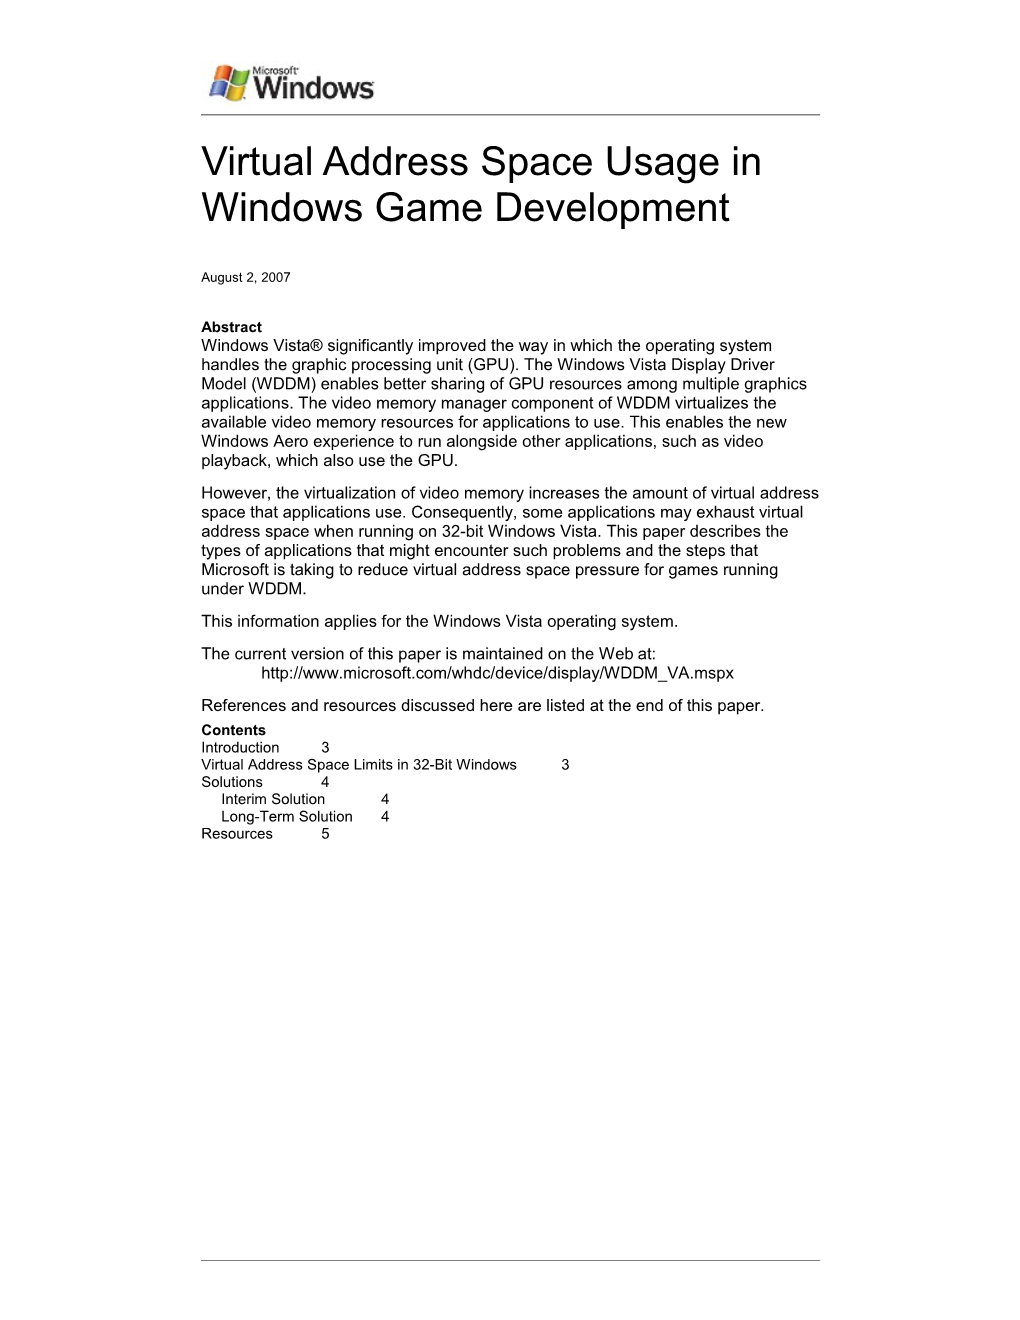 Virtual Address Space Usage in Windows Game Development